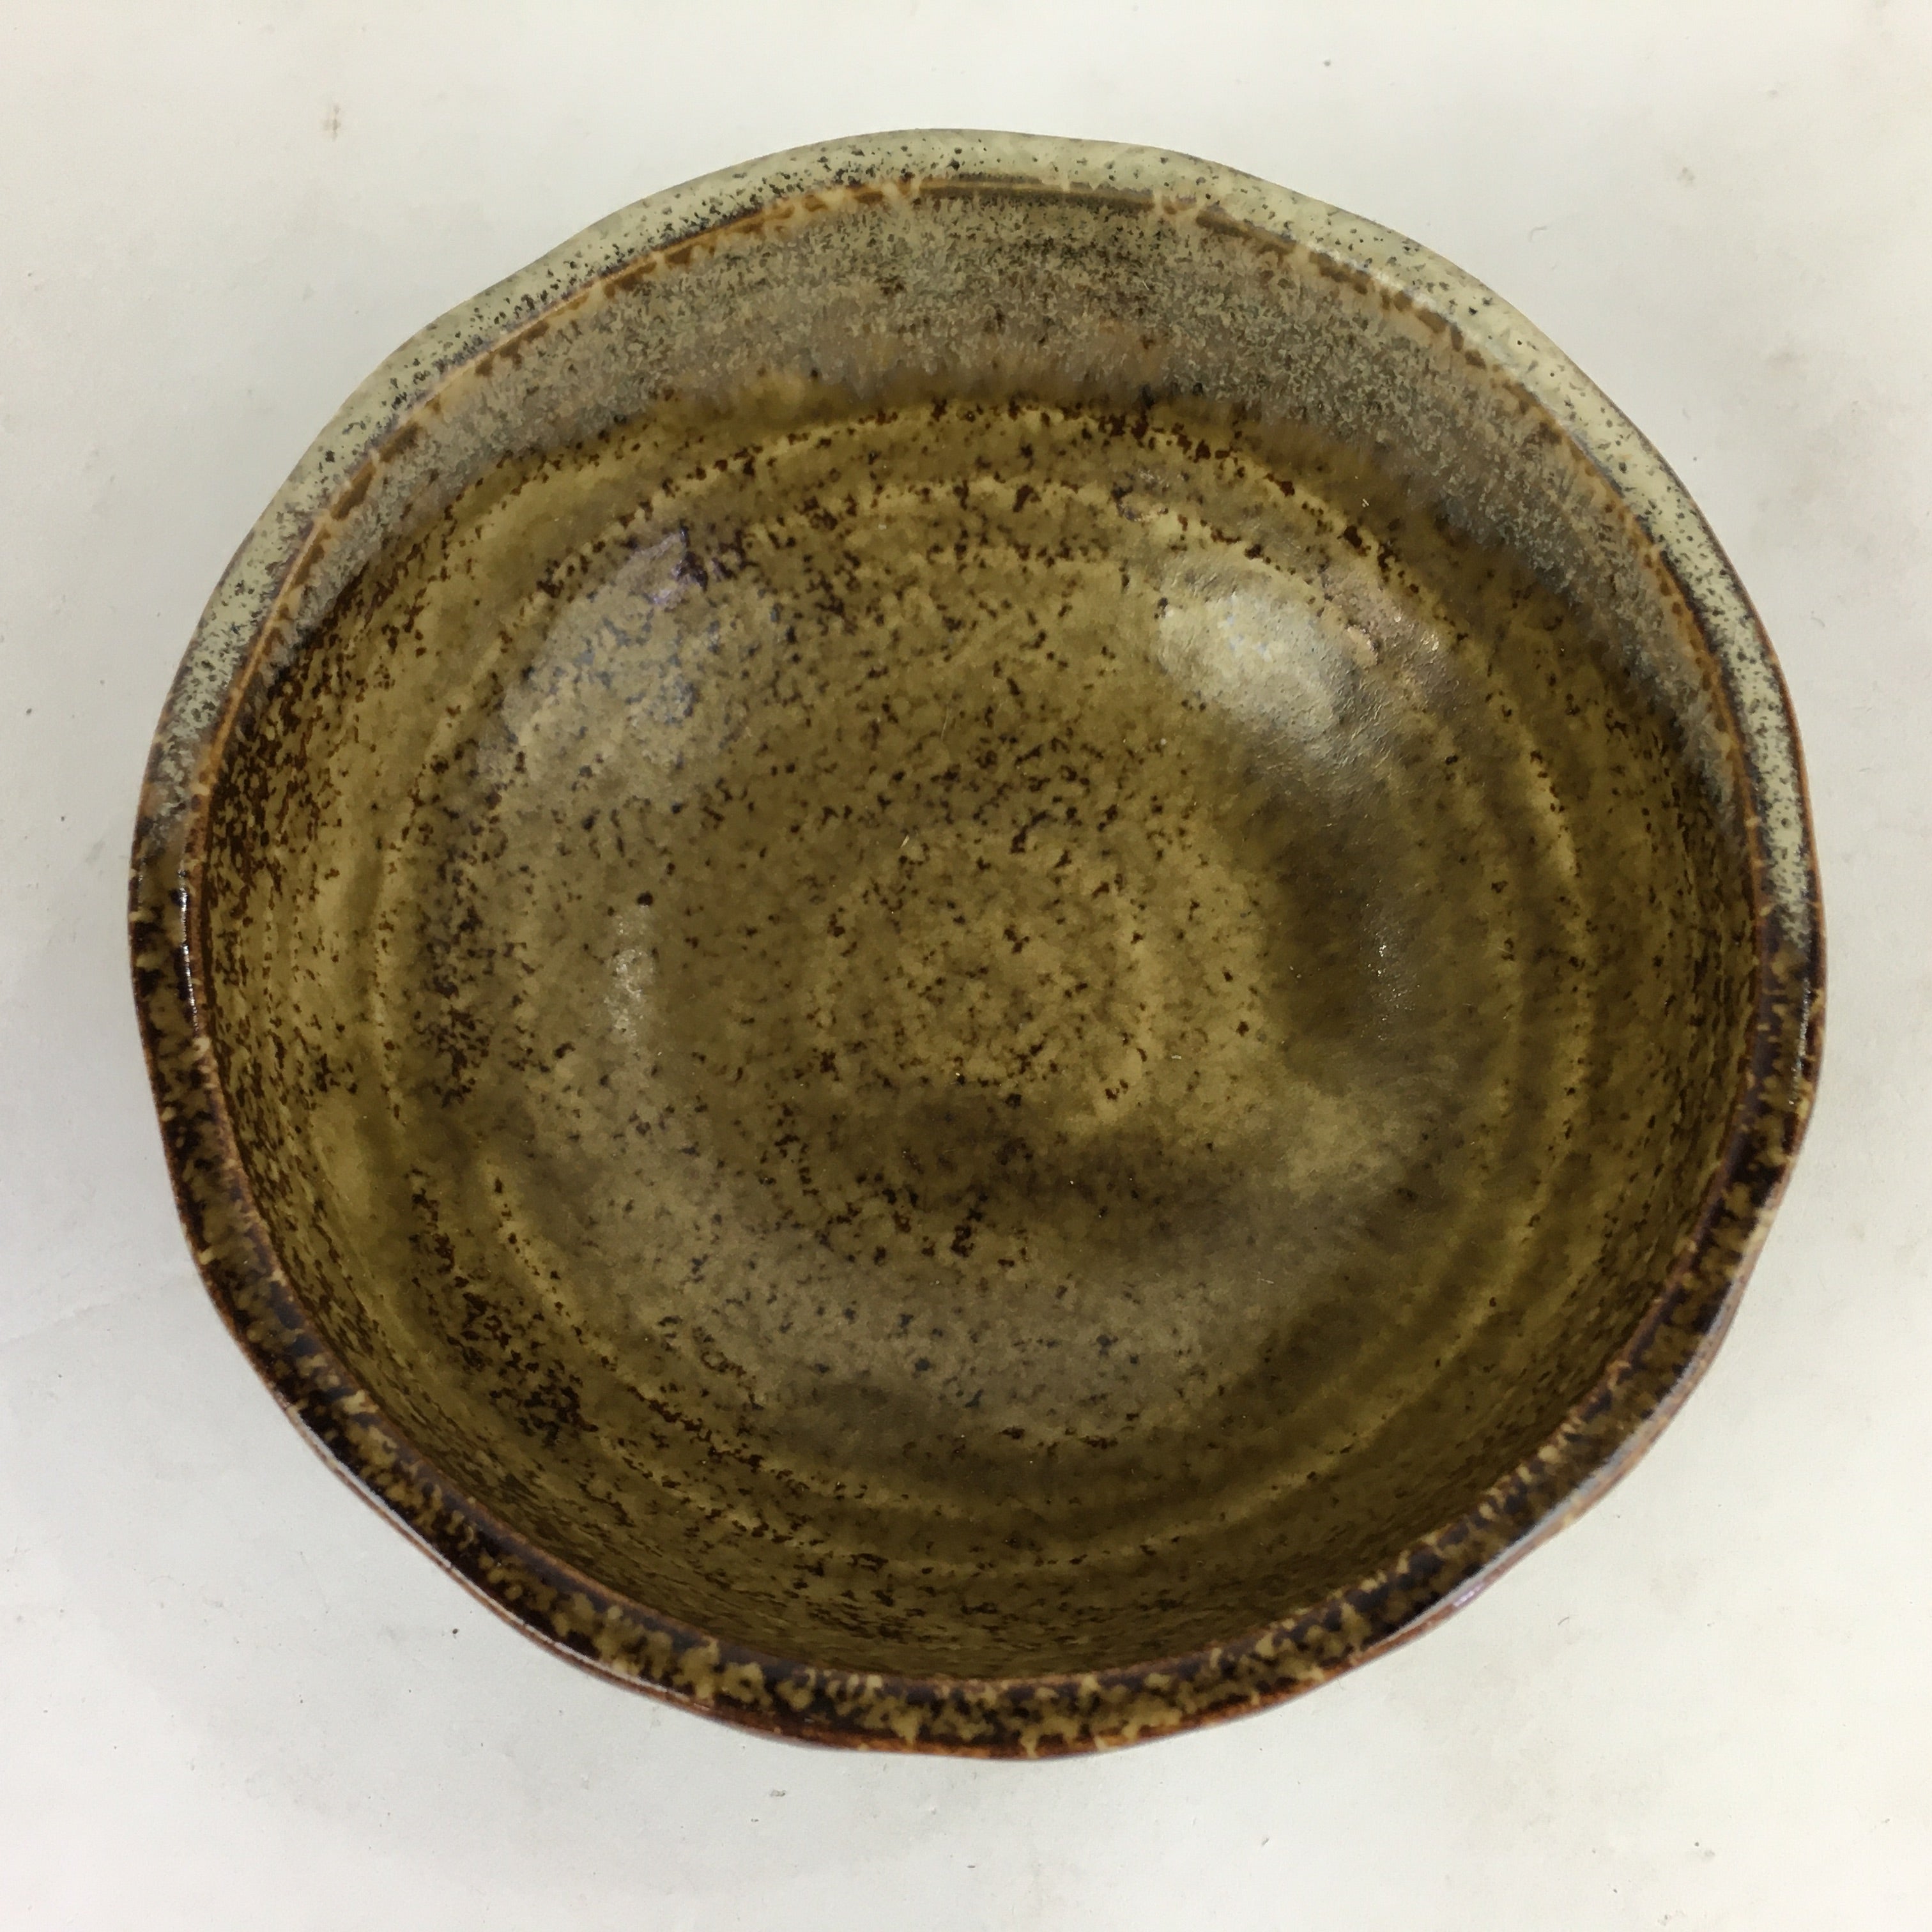 Japanese Ceramic Small Bowl Vtg Pottery Yakimono Kobachi Brown PP908